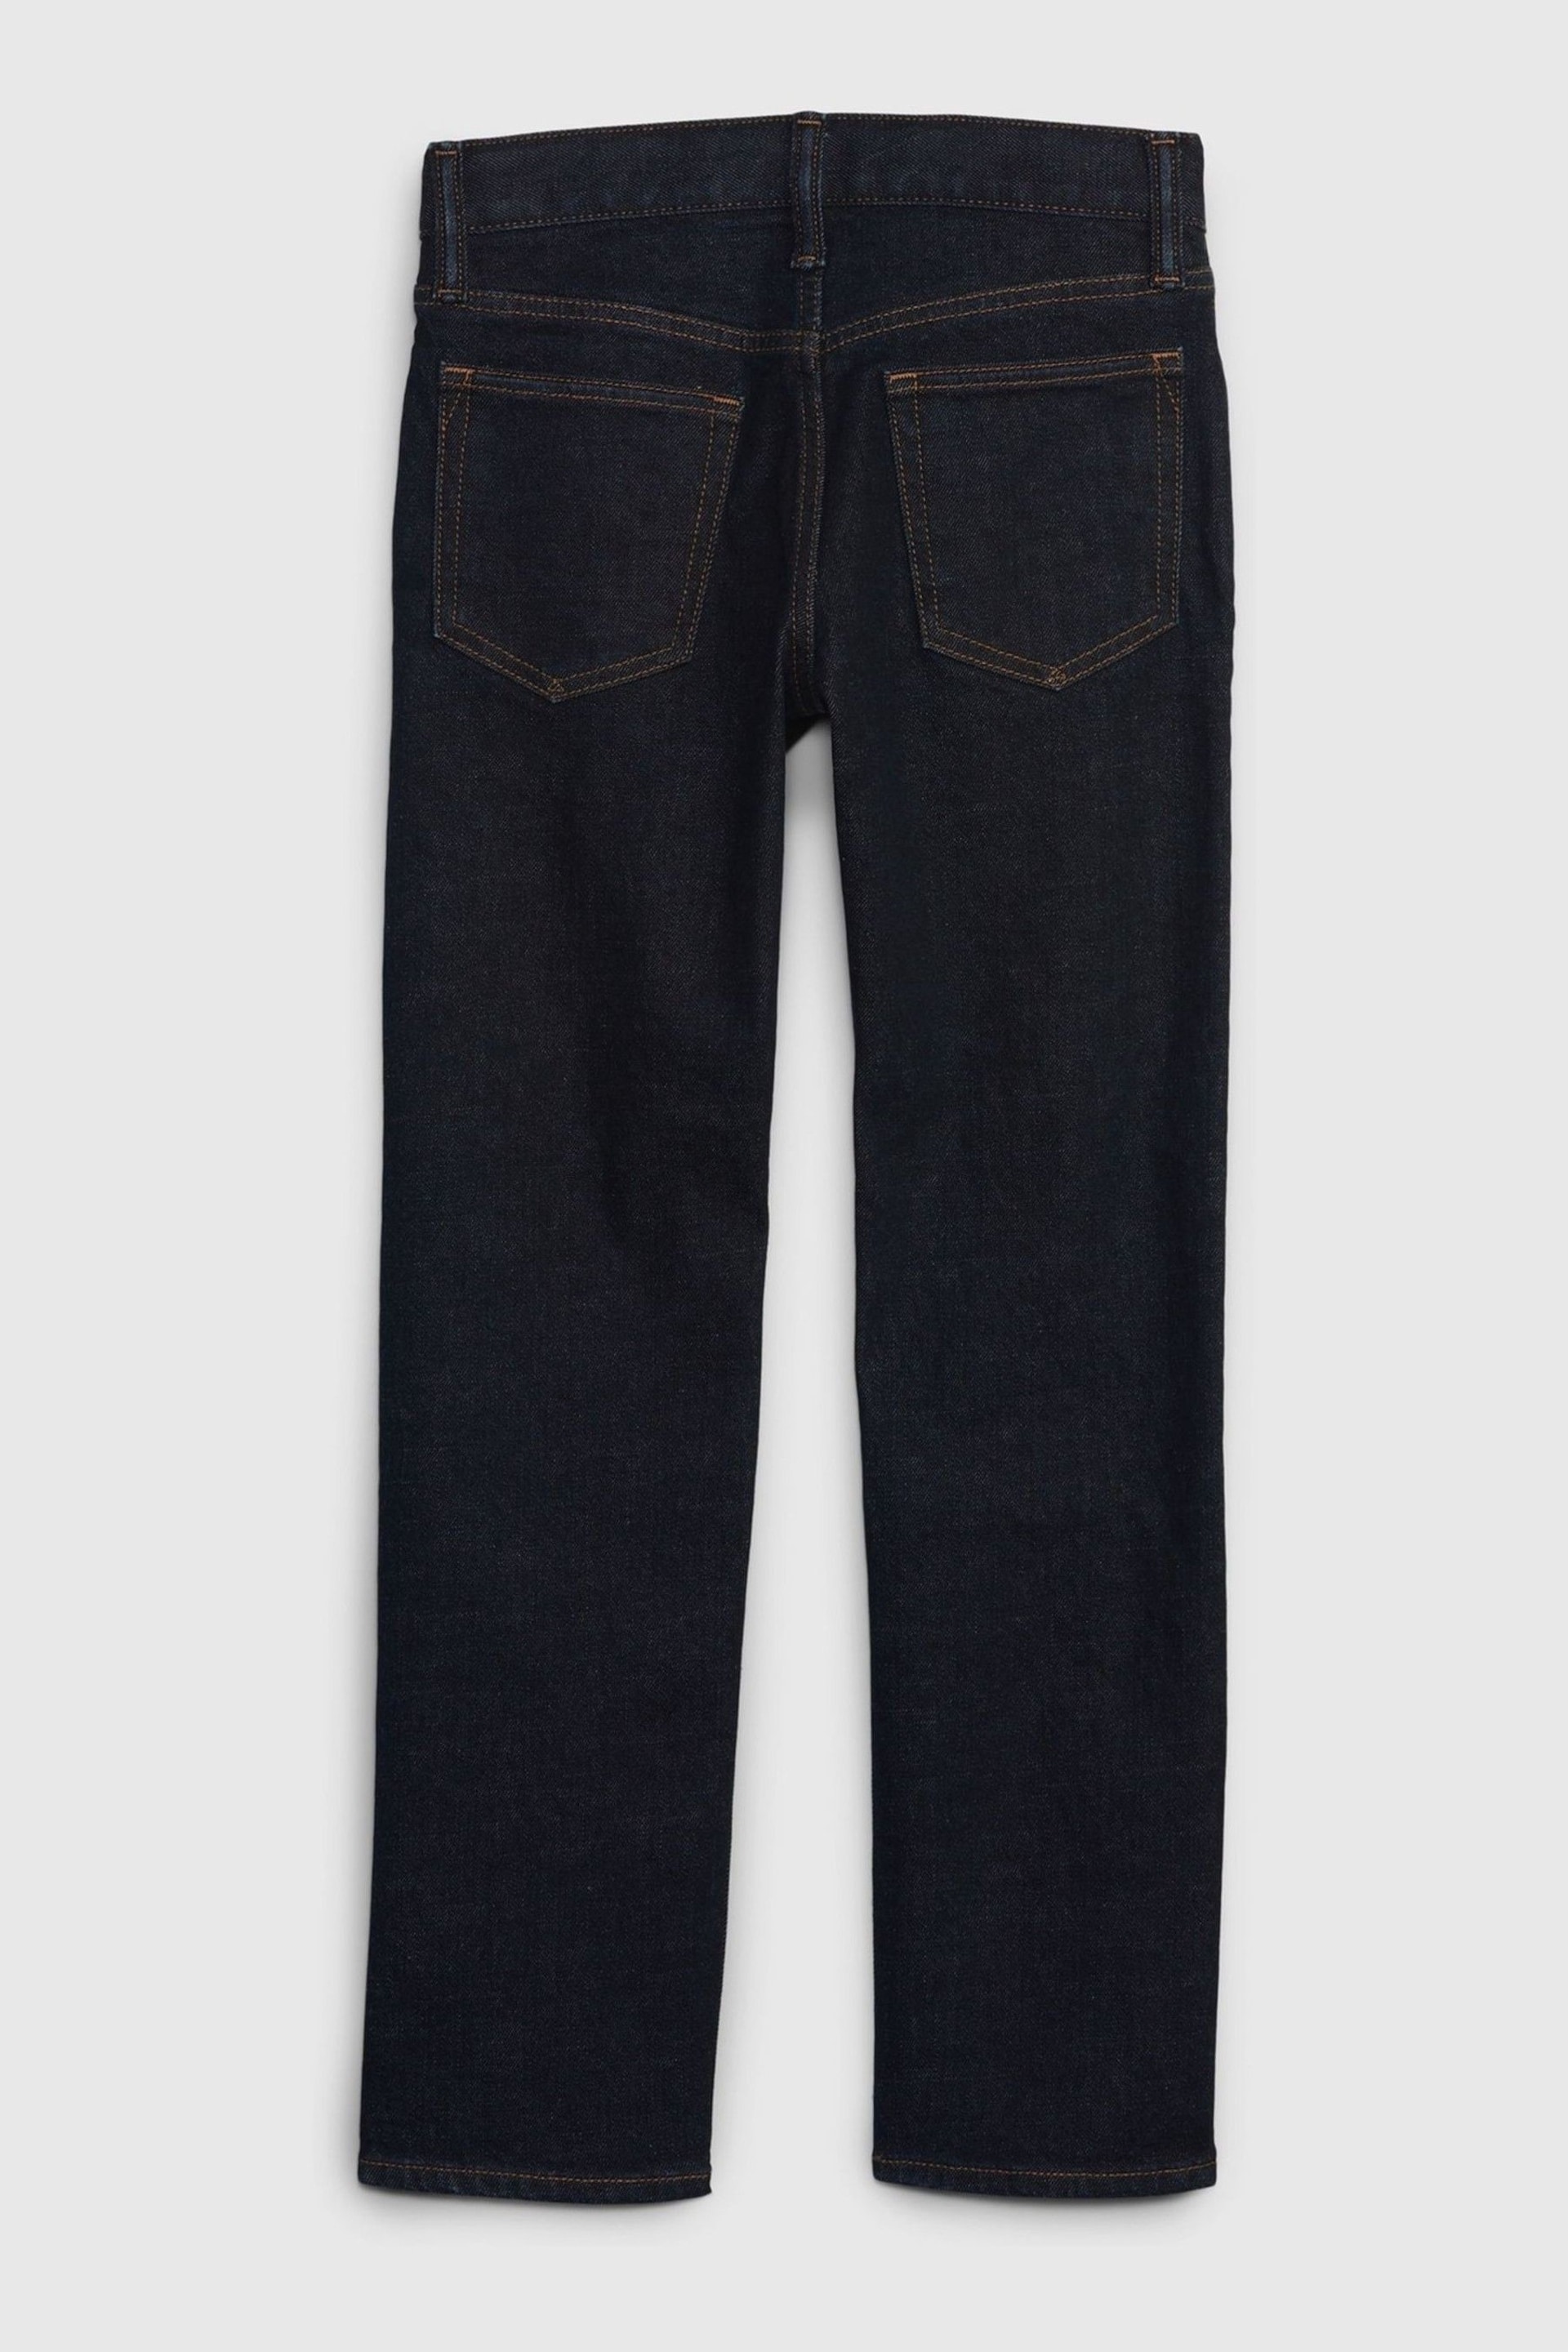 Gap Black Low Stretch Slim Jeans (5-13yrs) - Image 4 of 6